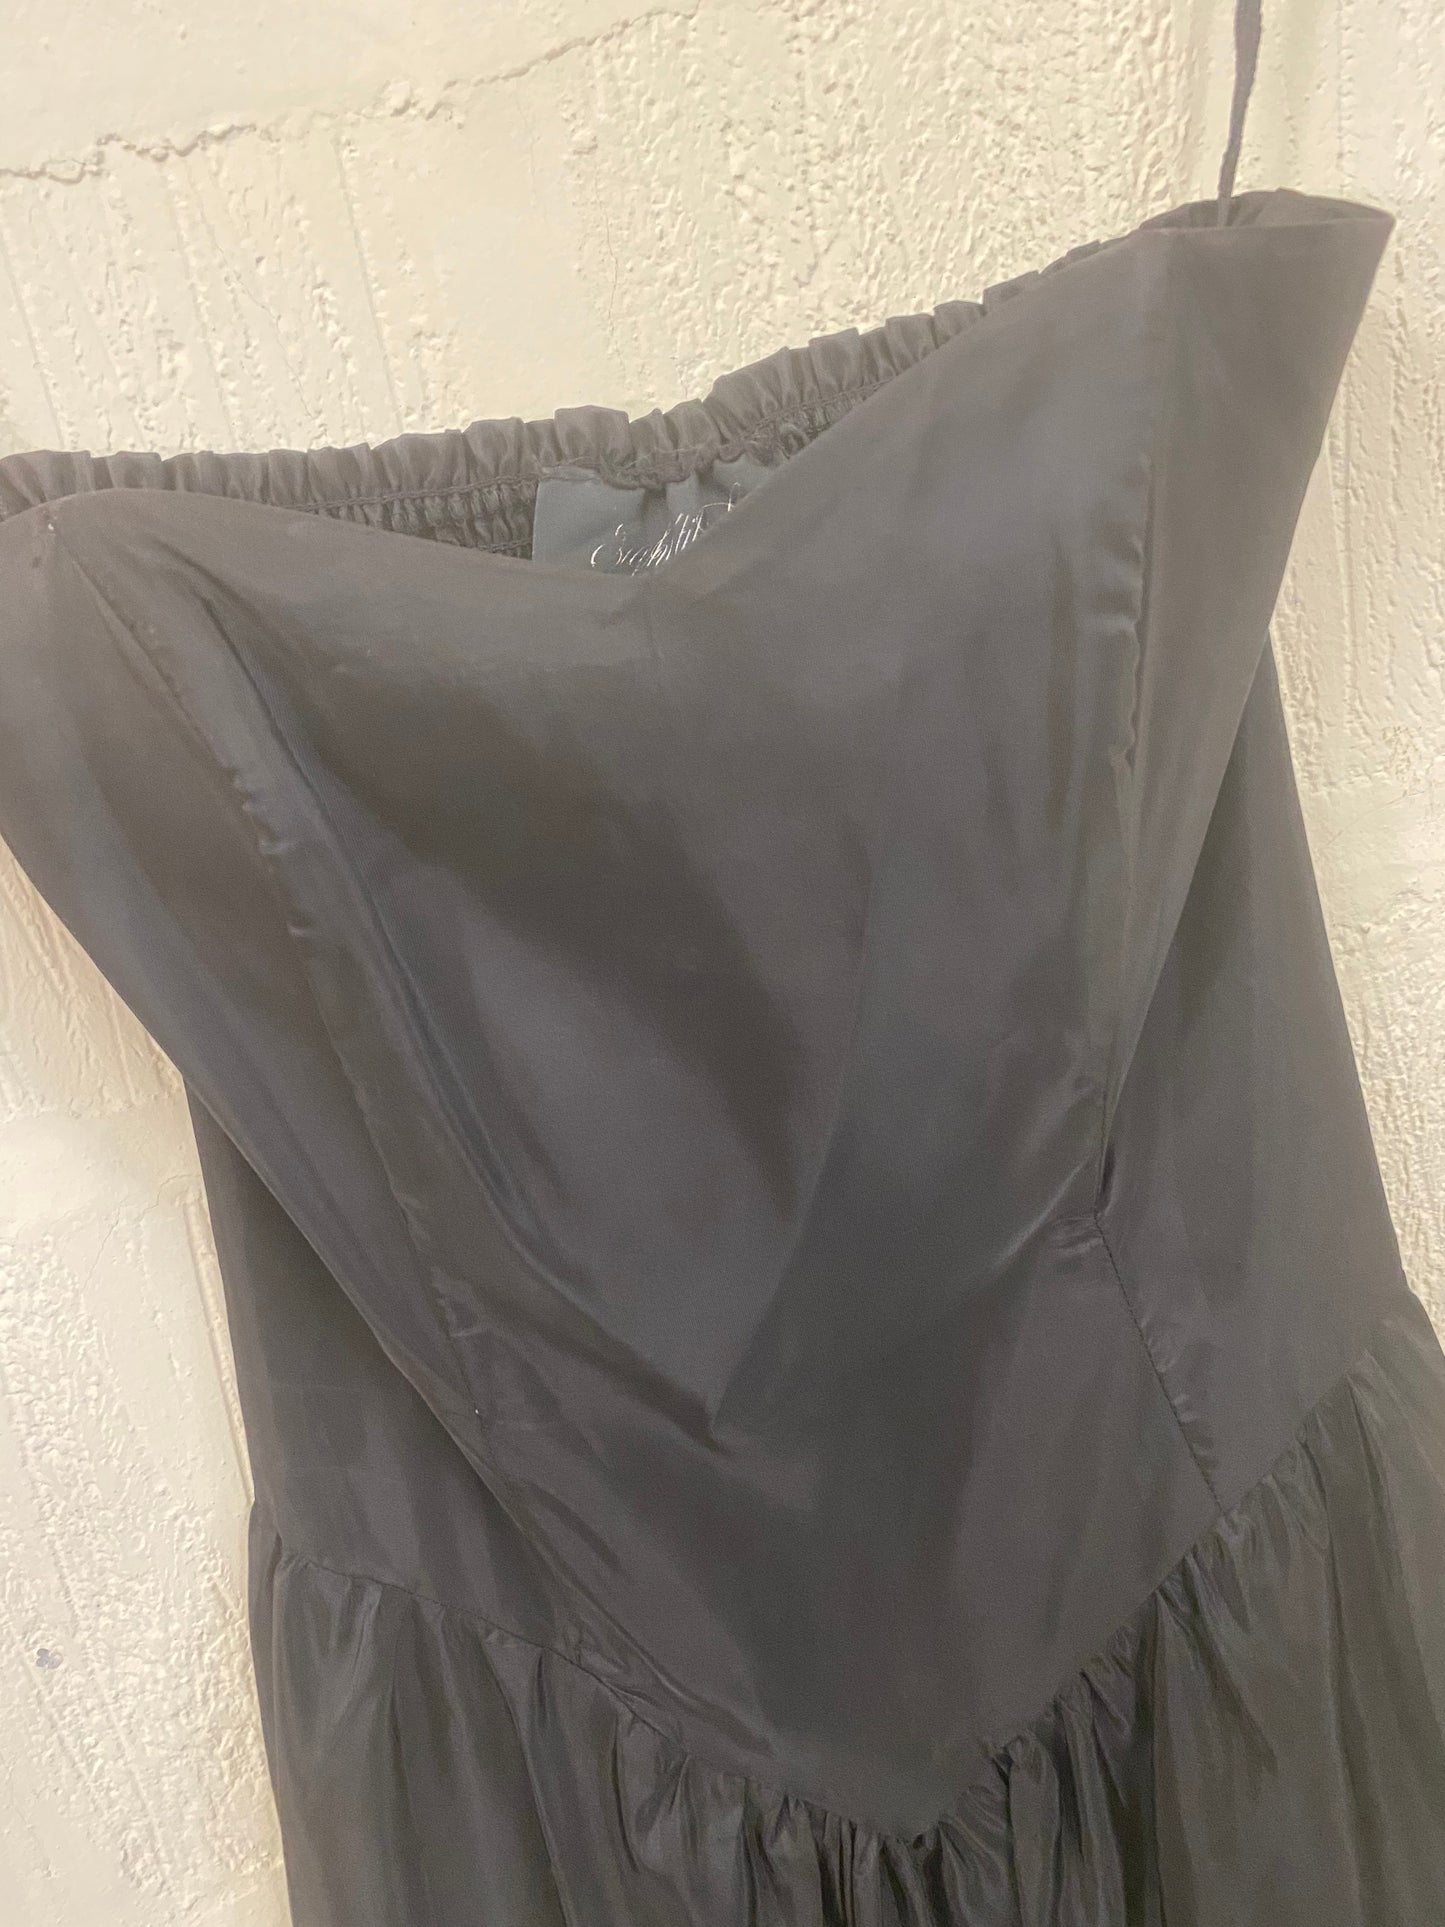 Vintage 1980s Black Strapless Dress Size 12